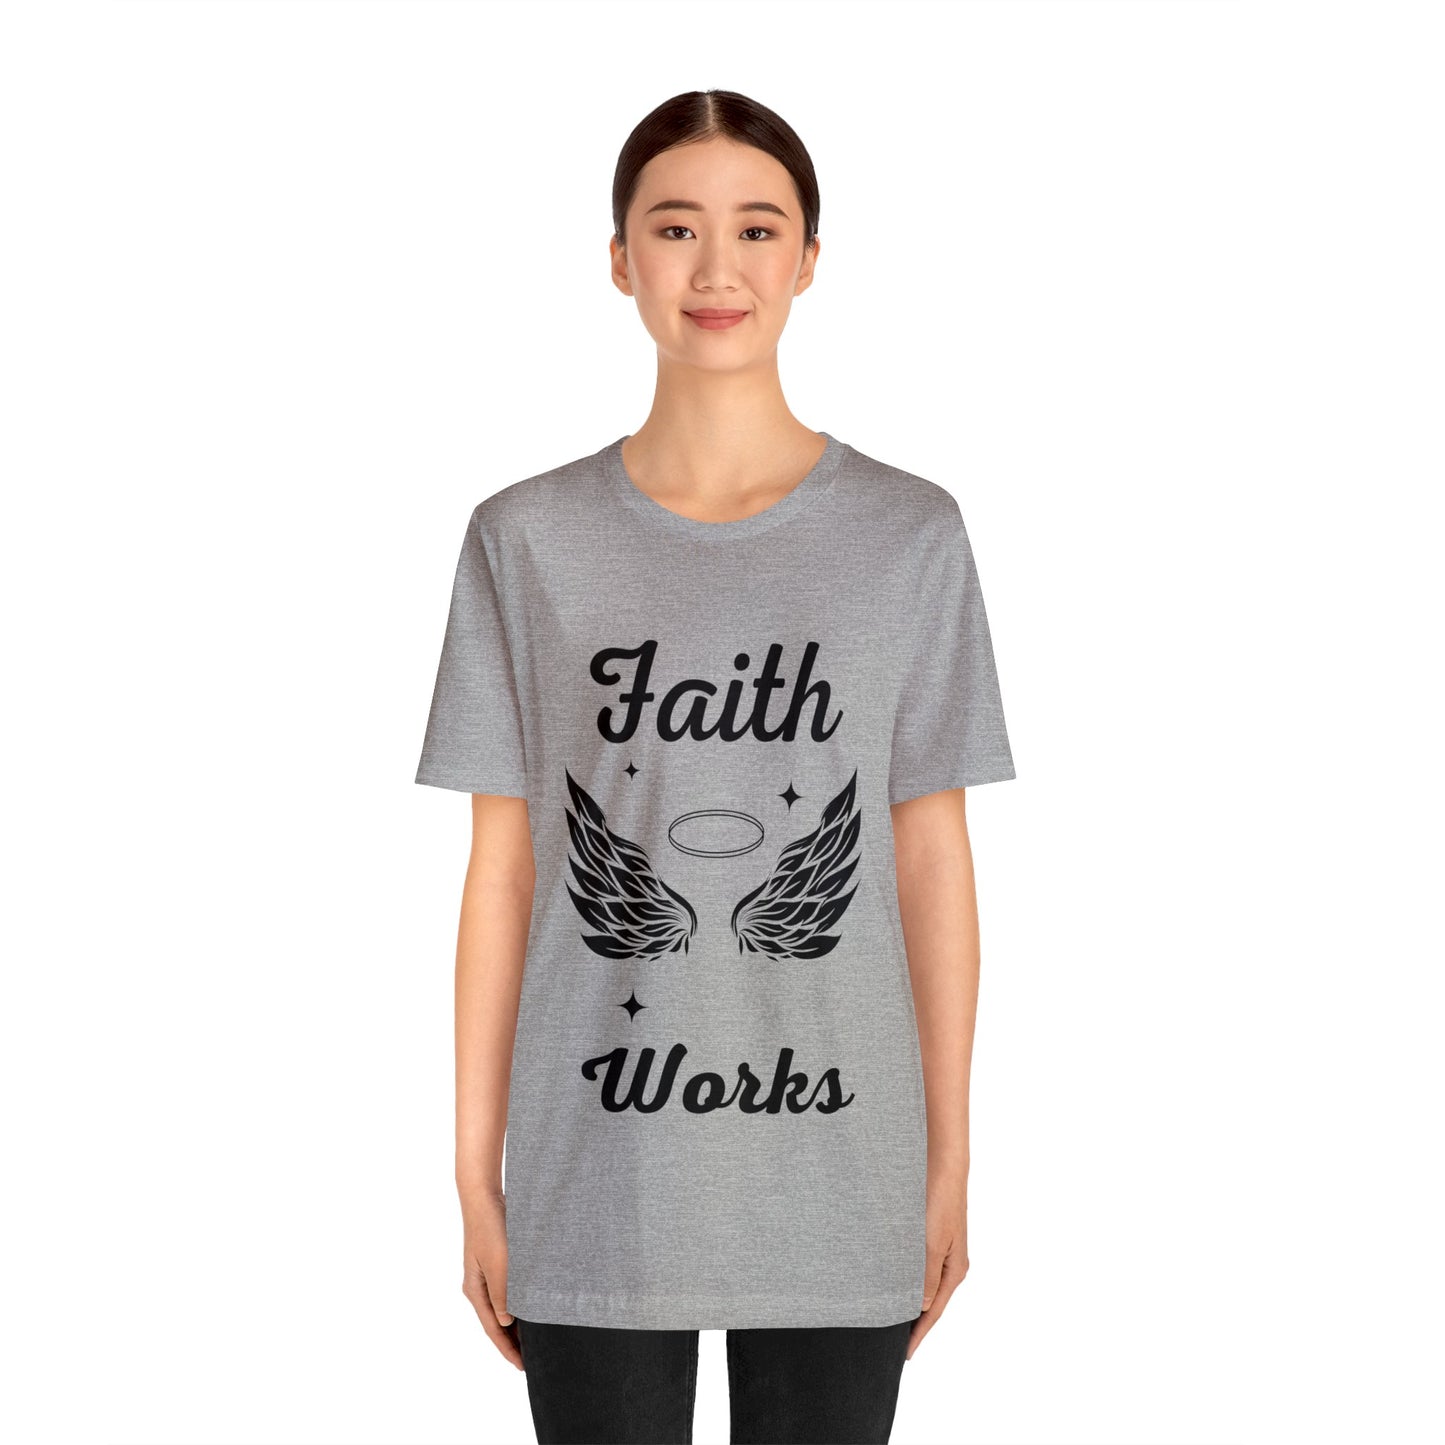 Religious Shirt - "Faith Works" -Christian Shirt, Faith Shirt, Jesus Shirt